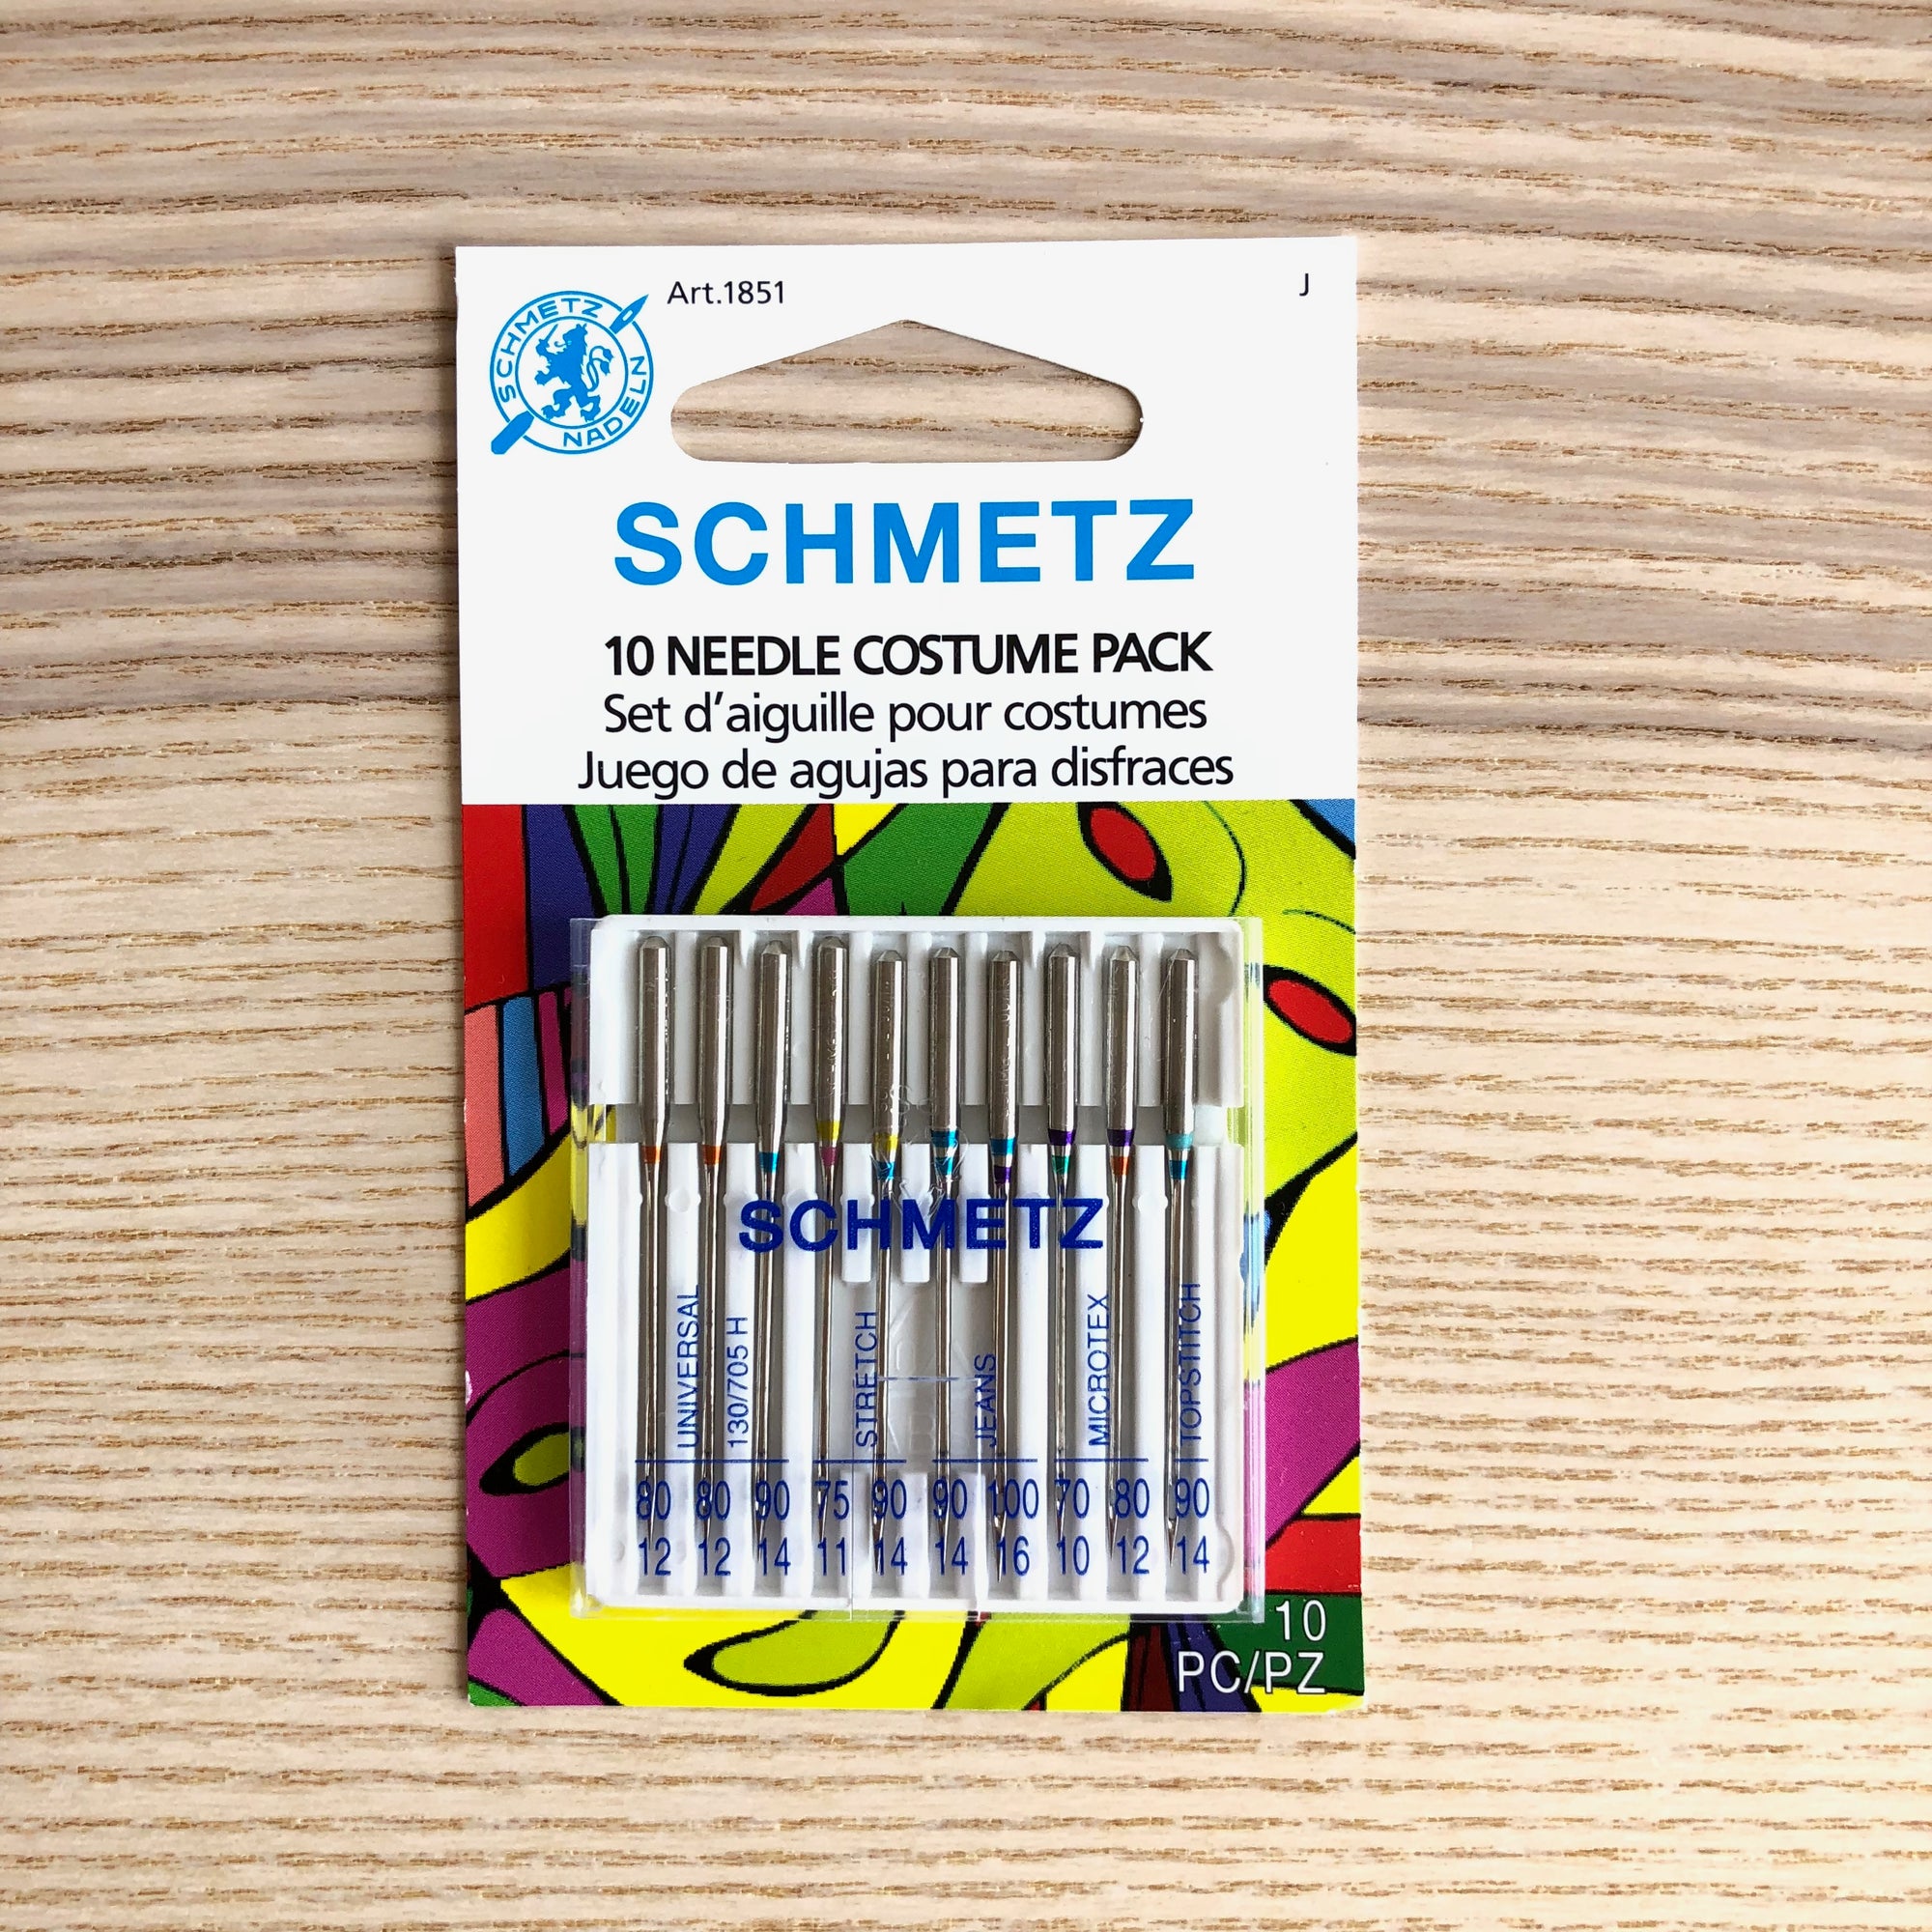 Schmetz Machine Needles Costume Pack